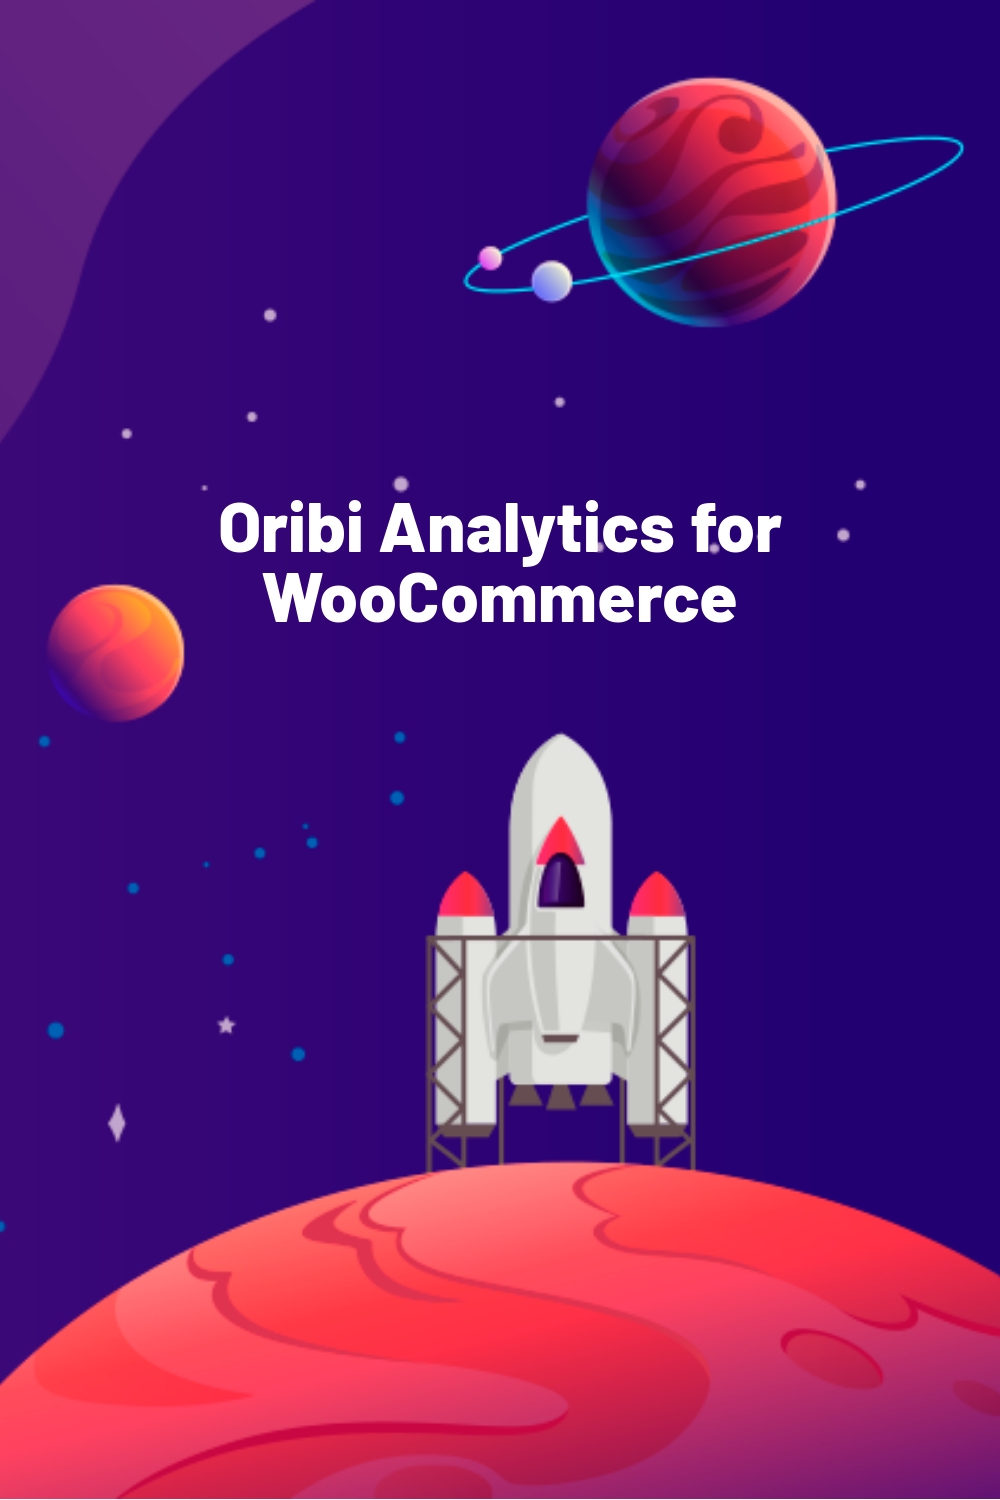 Oribi Analytics for WooCommerce